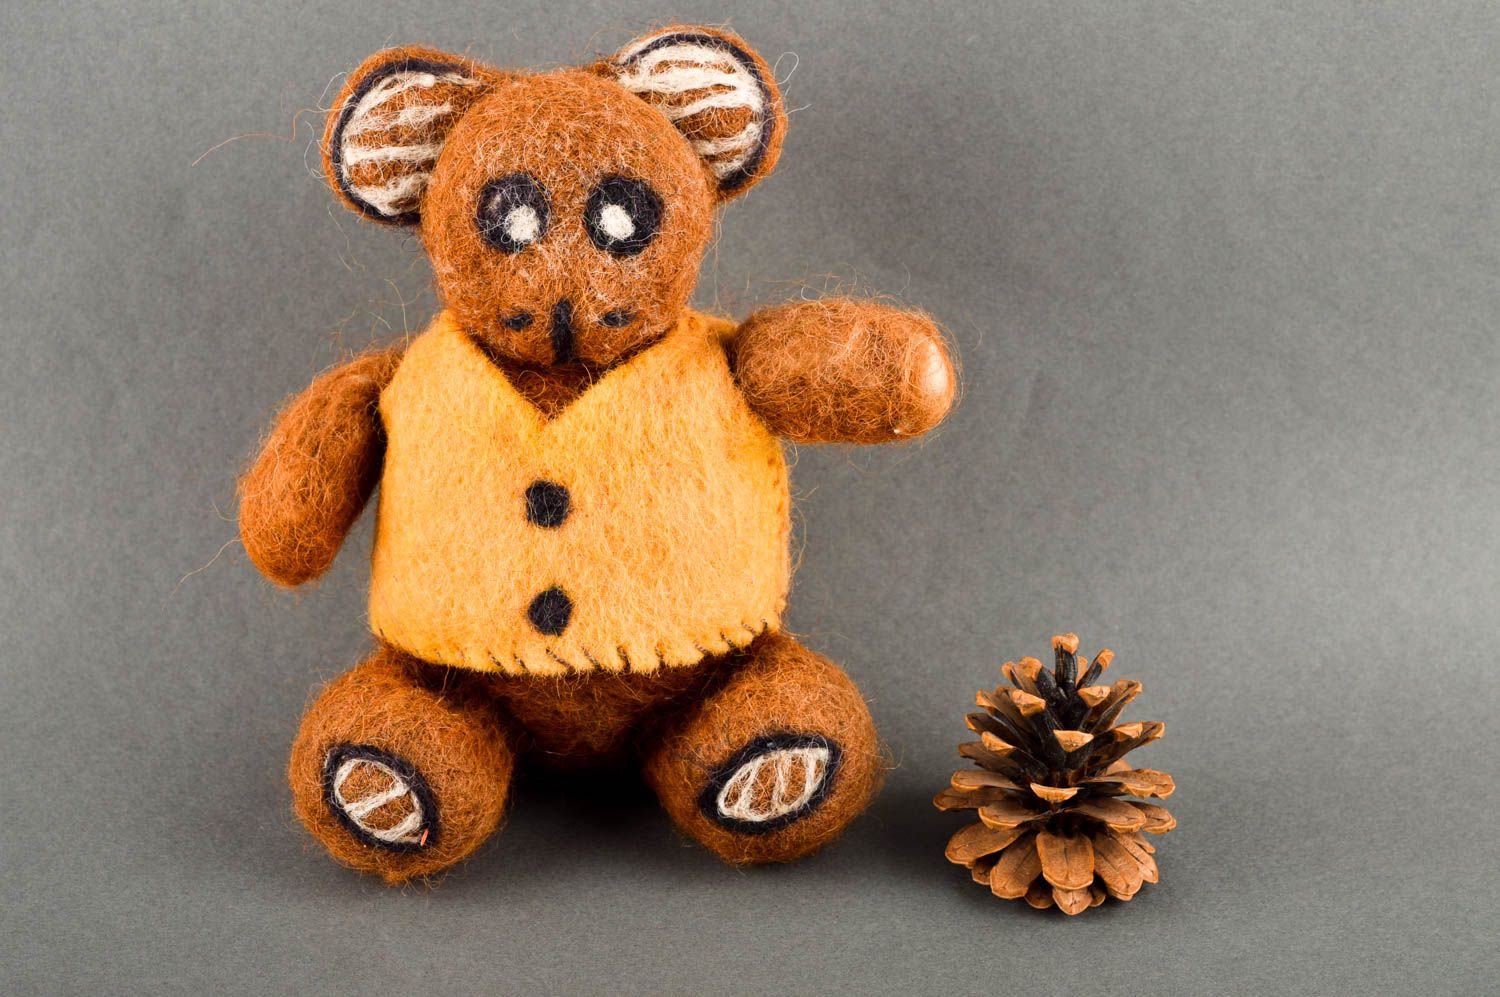 Handmade woolen toy felted toys for children handmade accessories nursery decor photo 1